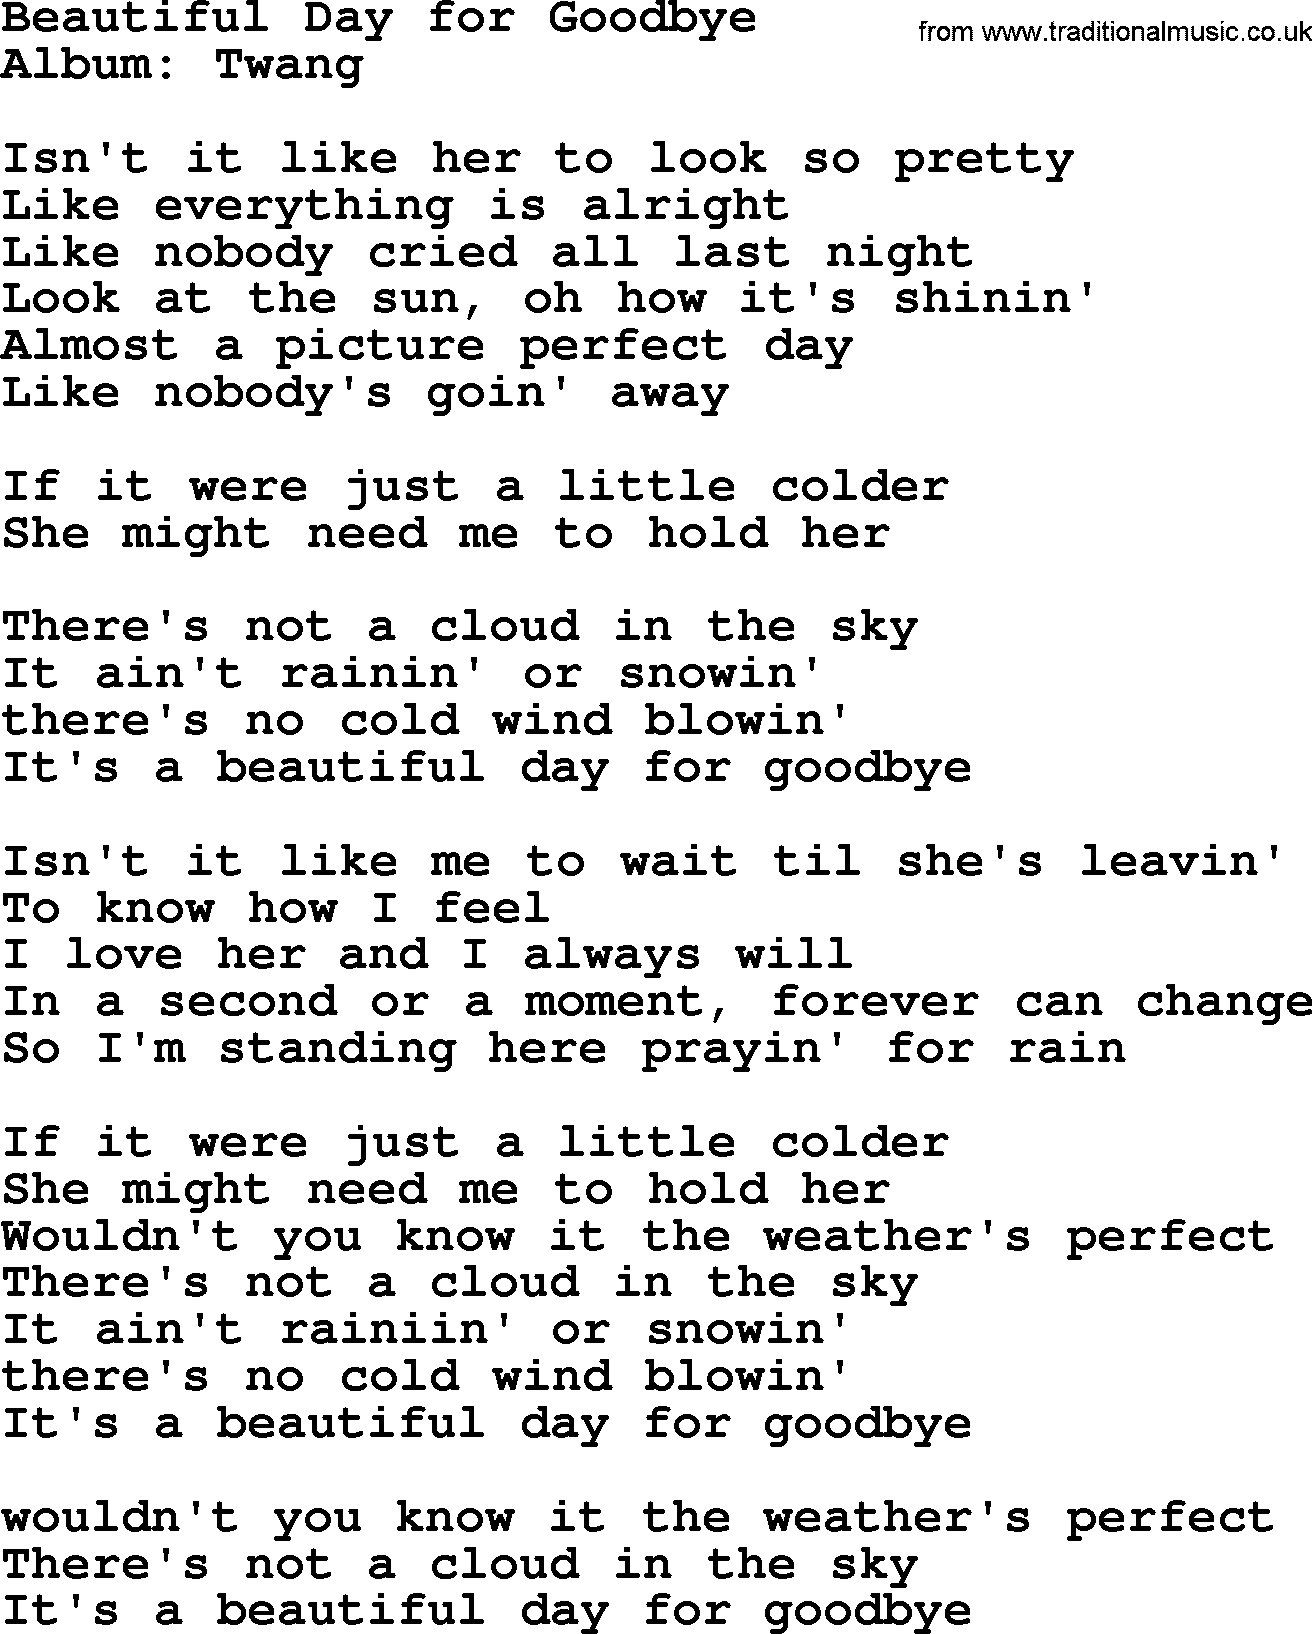 George Strait song: Beautiful Day for Goodbye, lyrics